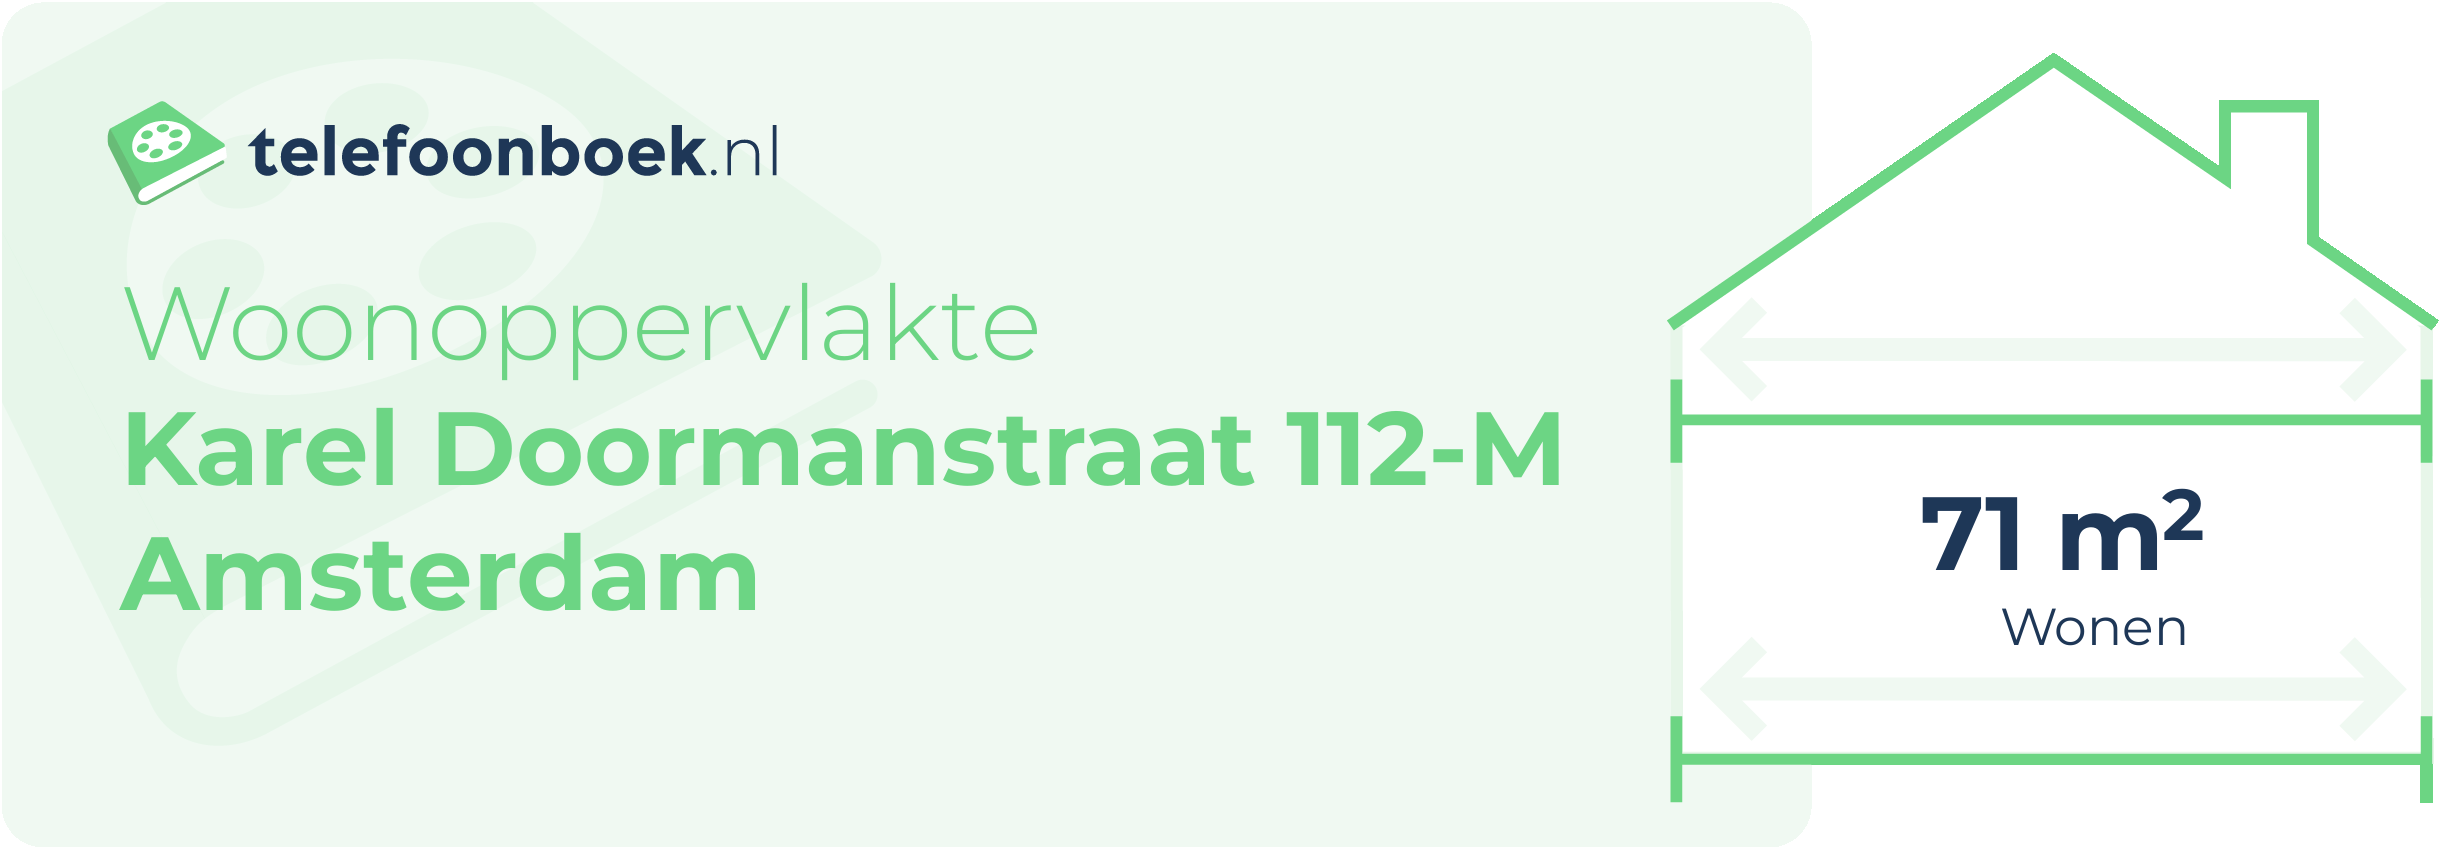 Woonoppervlakte Karel Doormanstraat 112-M Amsterdam